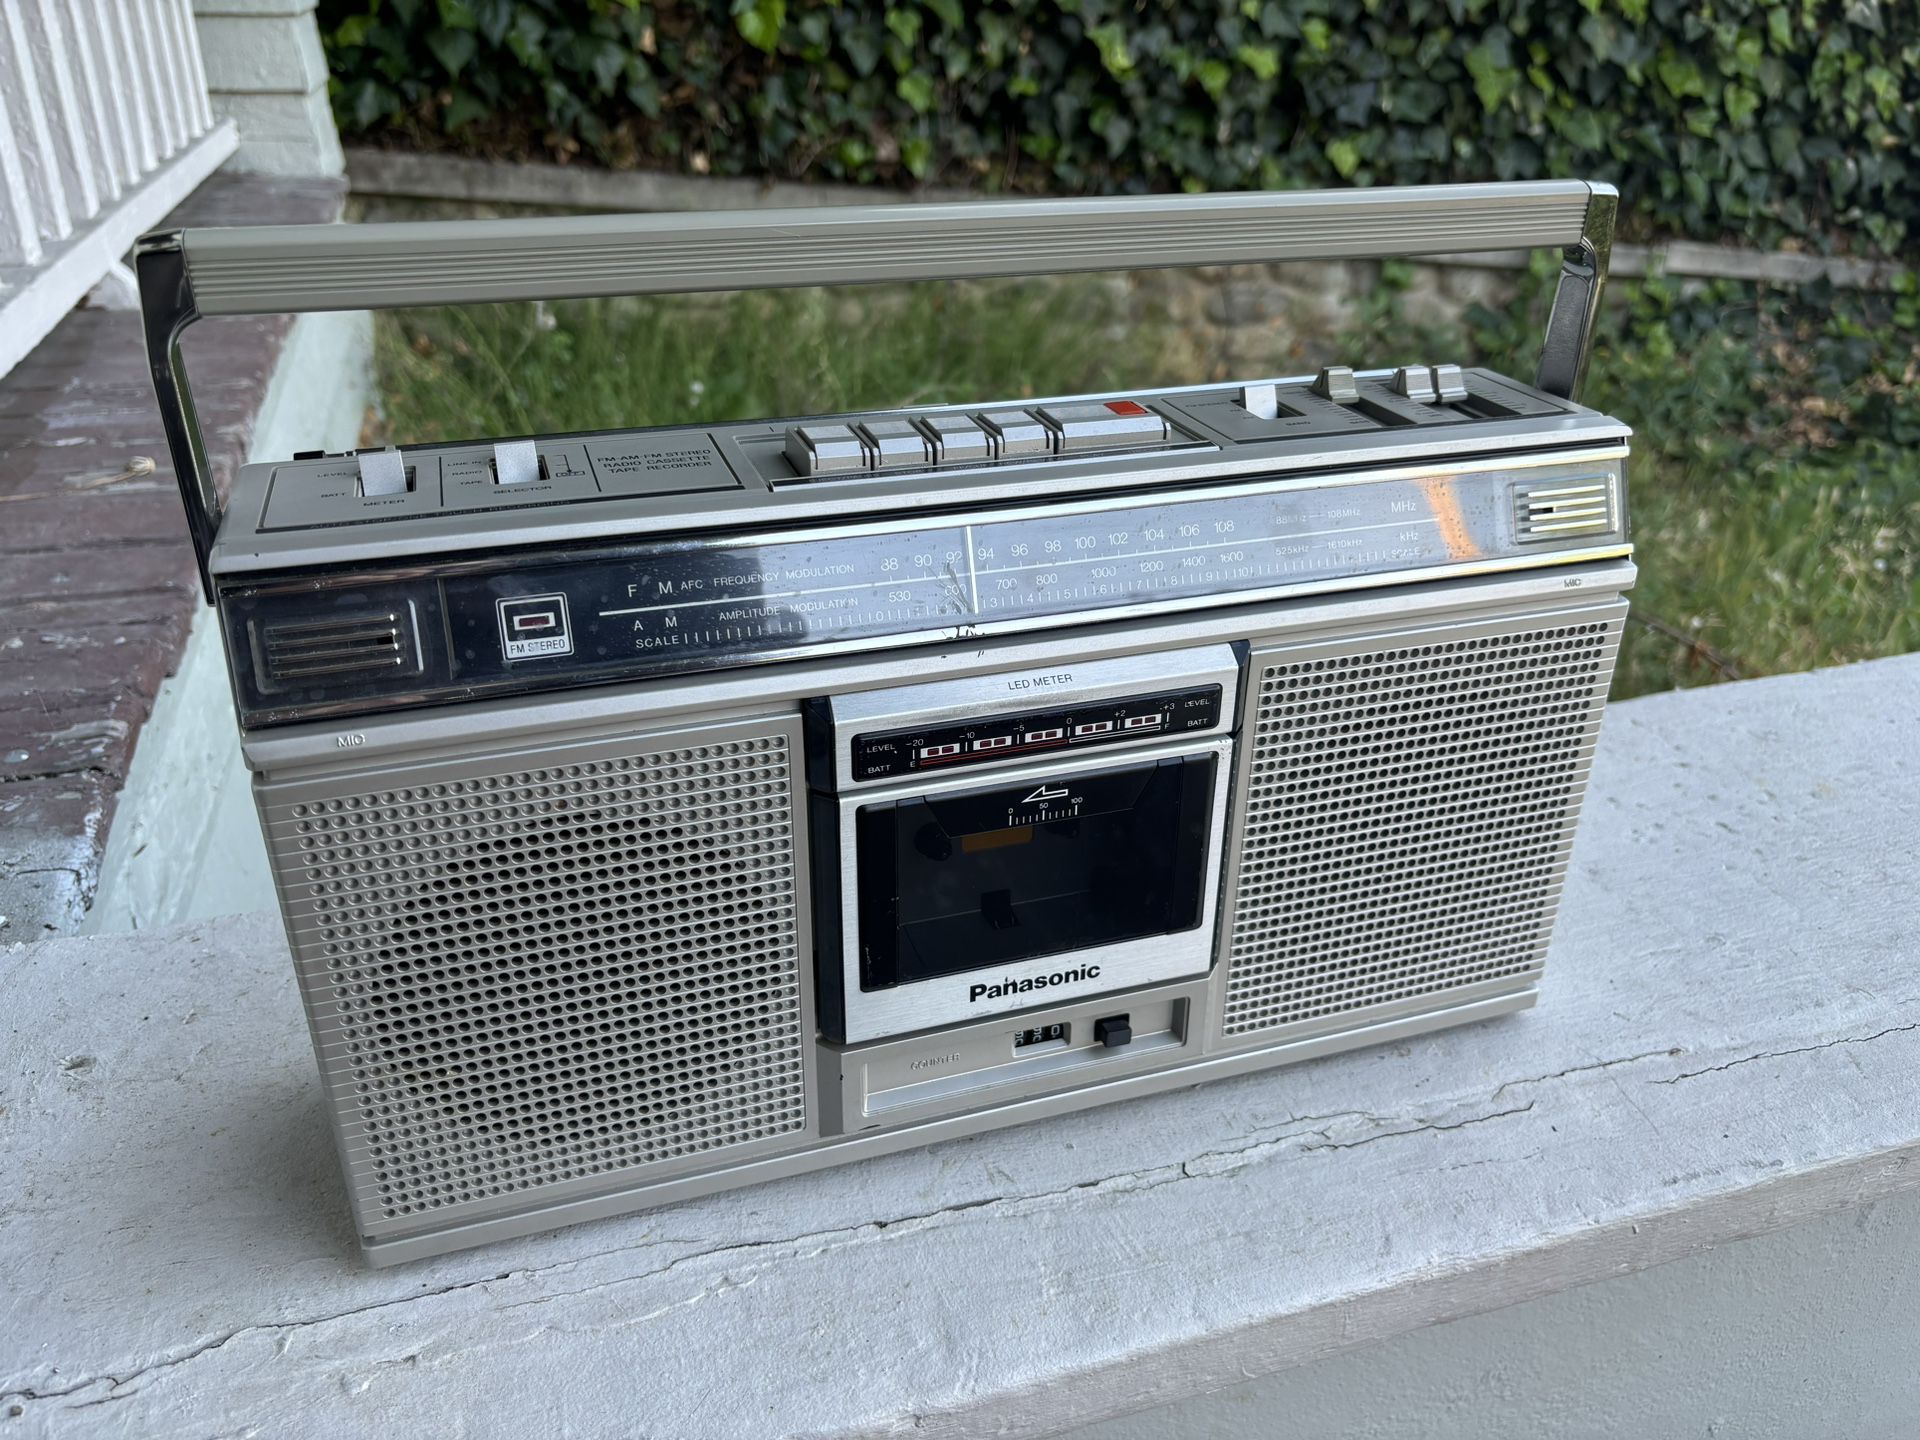 Panasonic RX-5020 Boombox Radio Boom Box Ghetto Blaster Ghettoblaster Cassette Tape Player